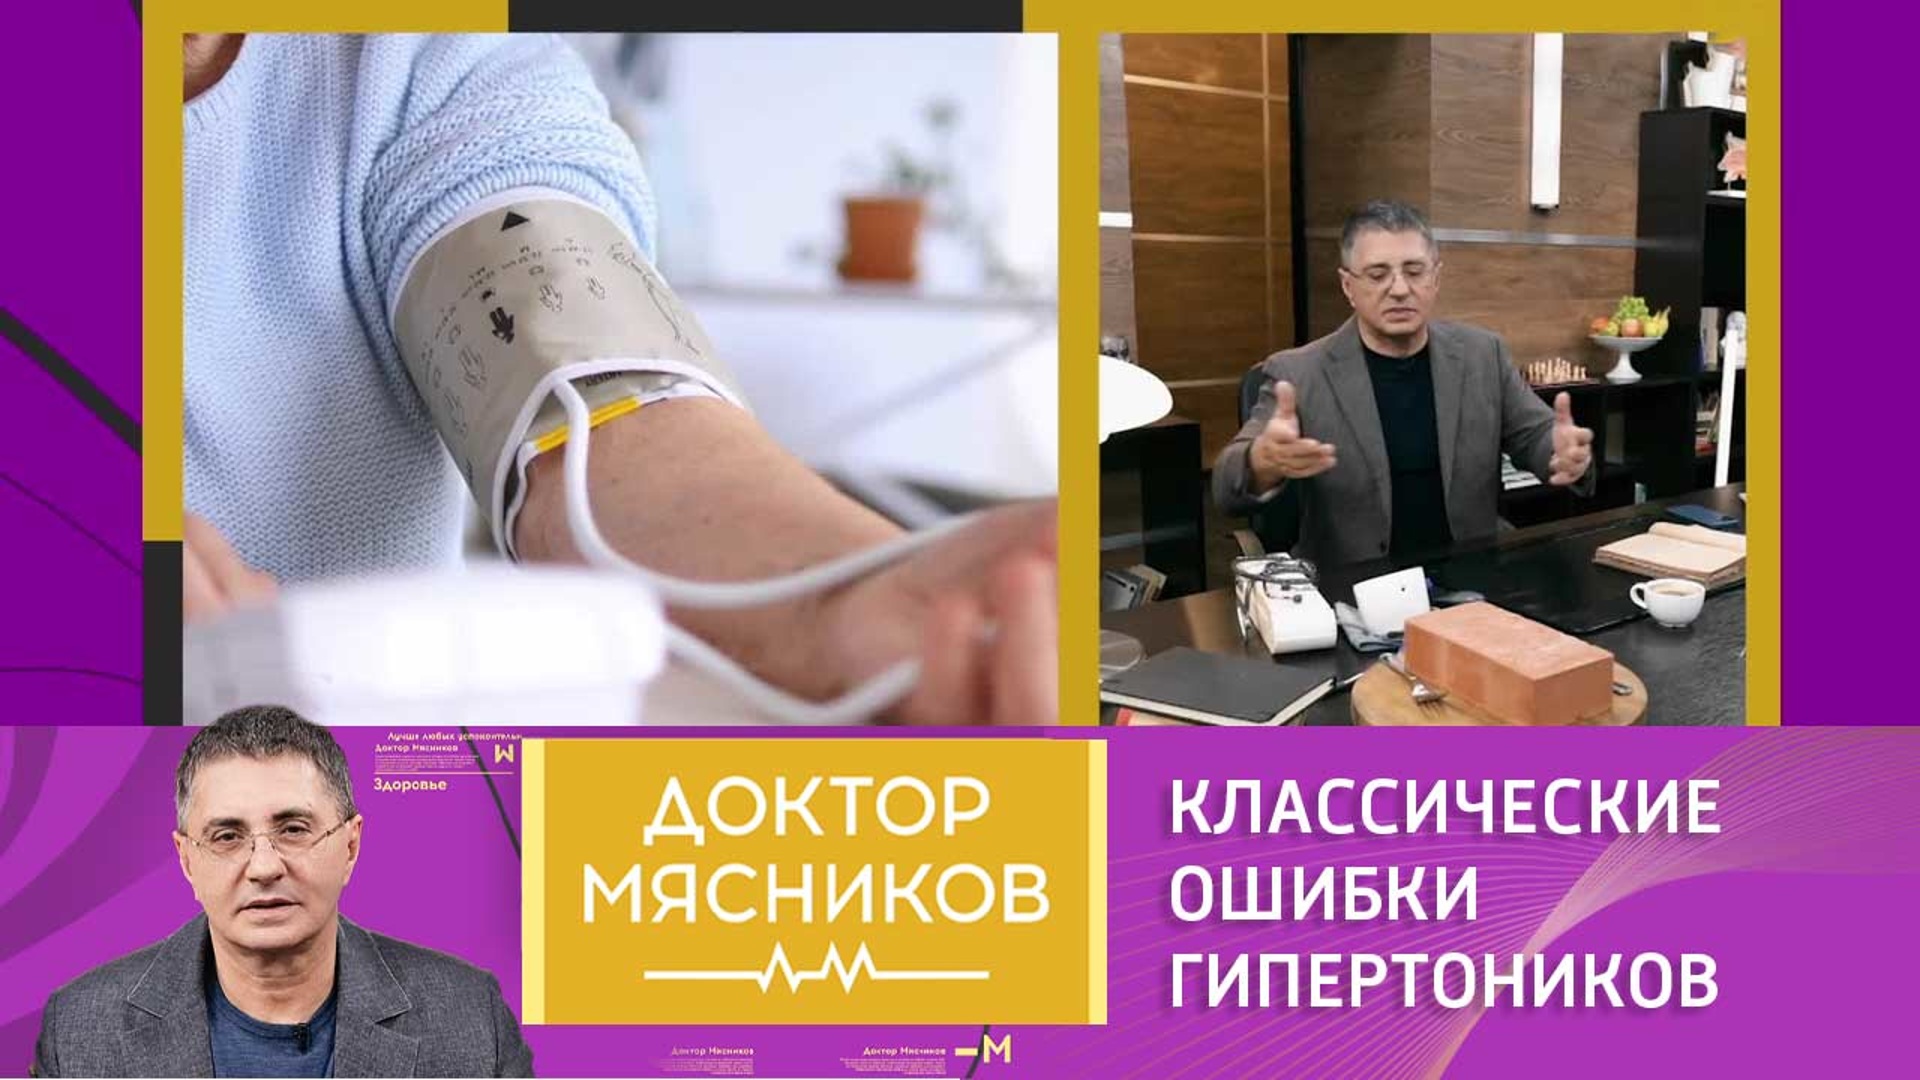 Доктор Мясников на 2 канале у Соловьева назвал препарат от гипертонии